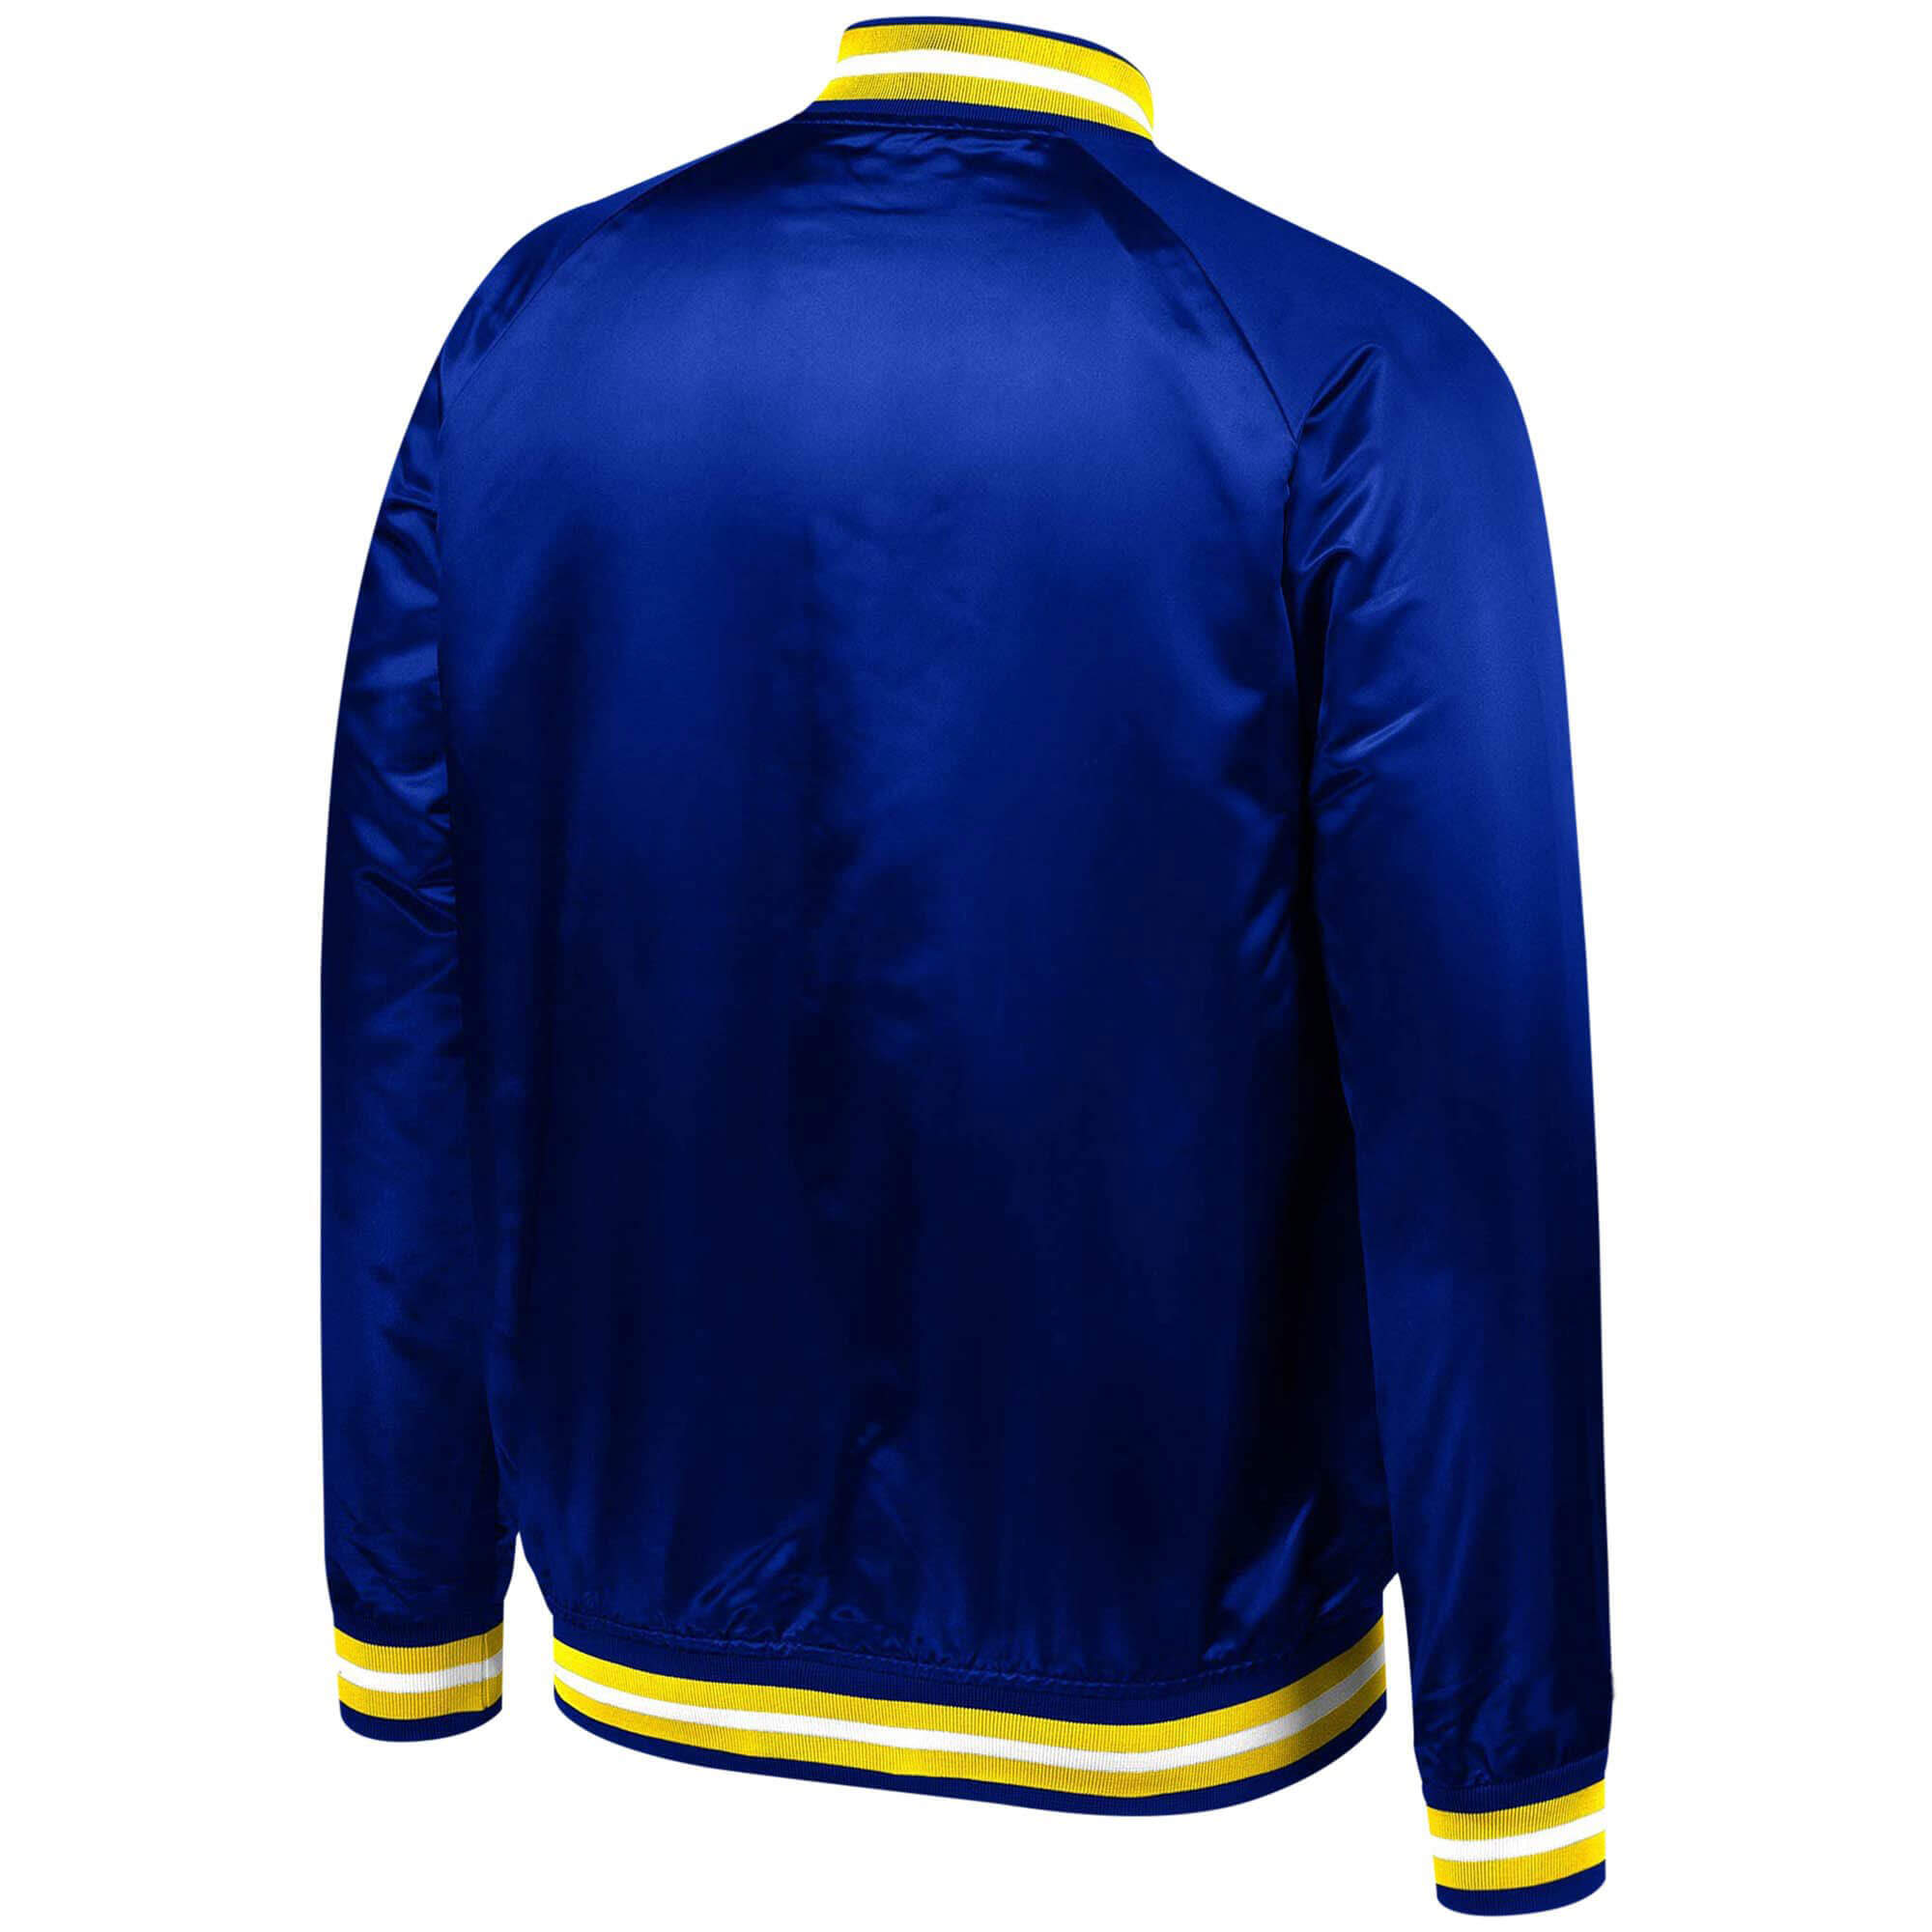 Satin Golden State Warriors Royal Jacket - Jackets Creator